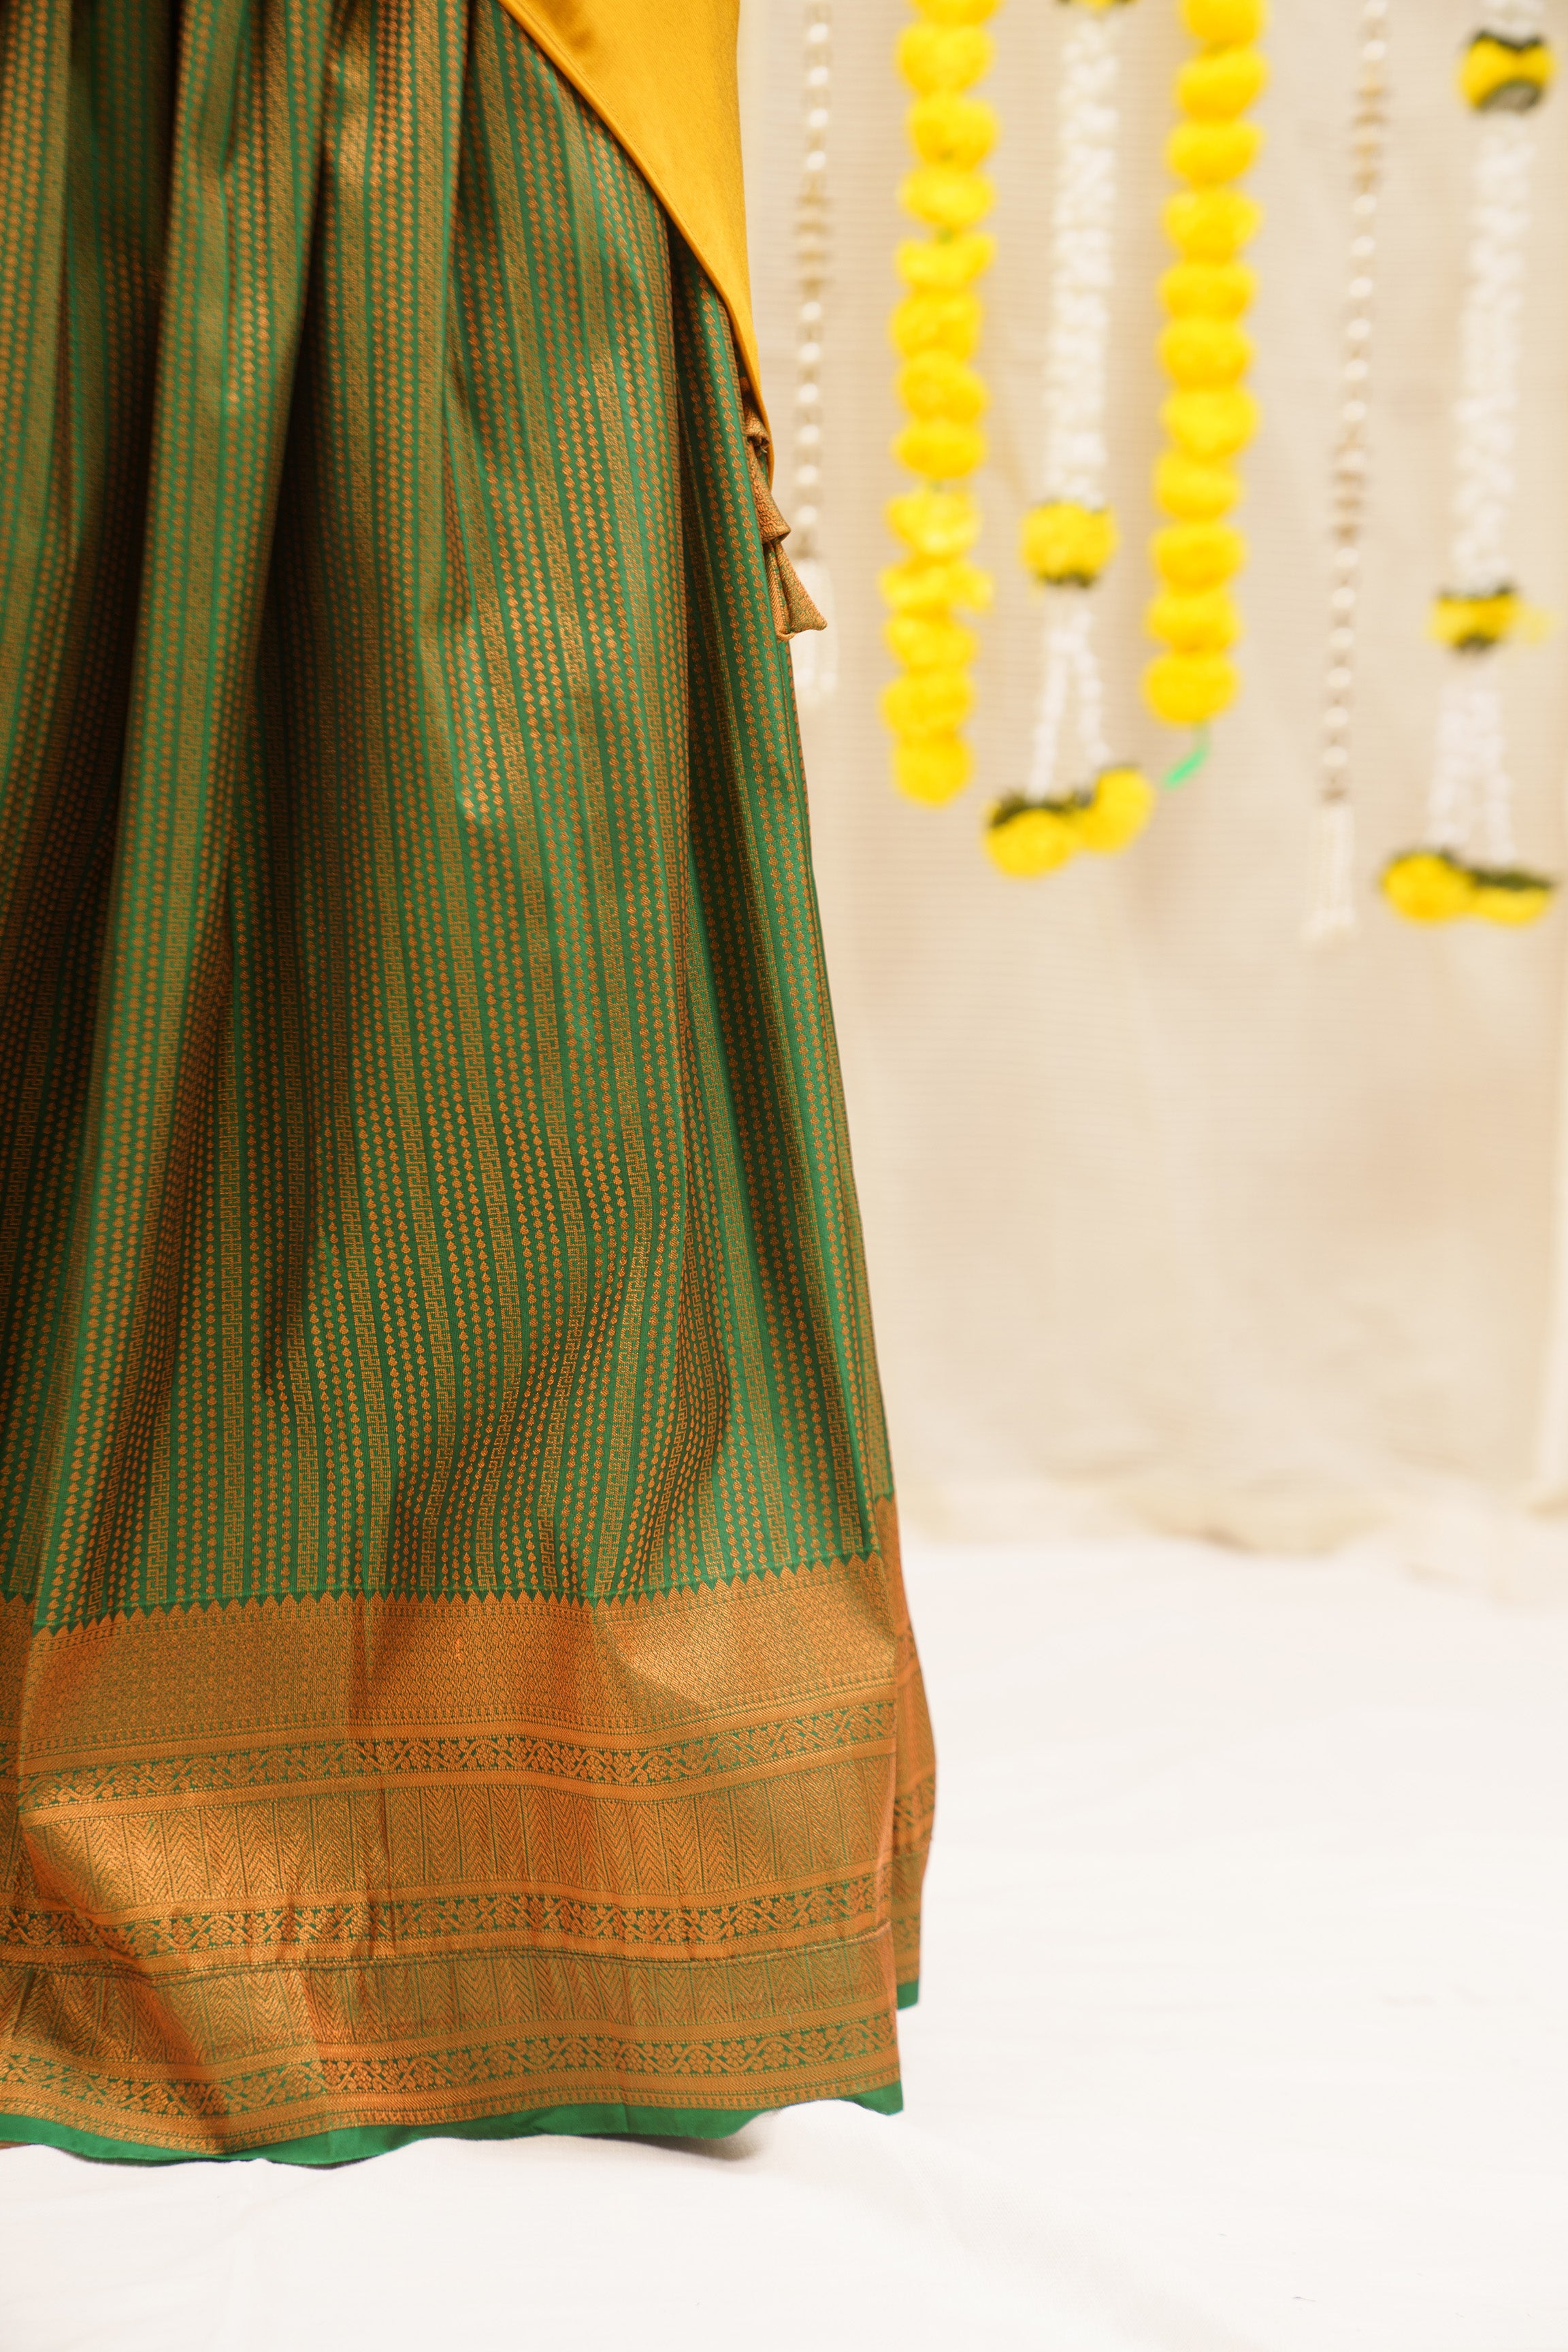 Nandini Green and Yellow Half saree